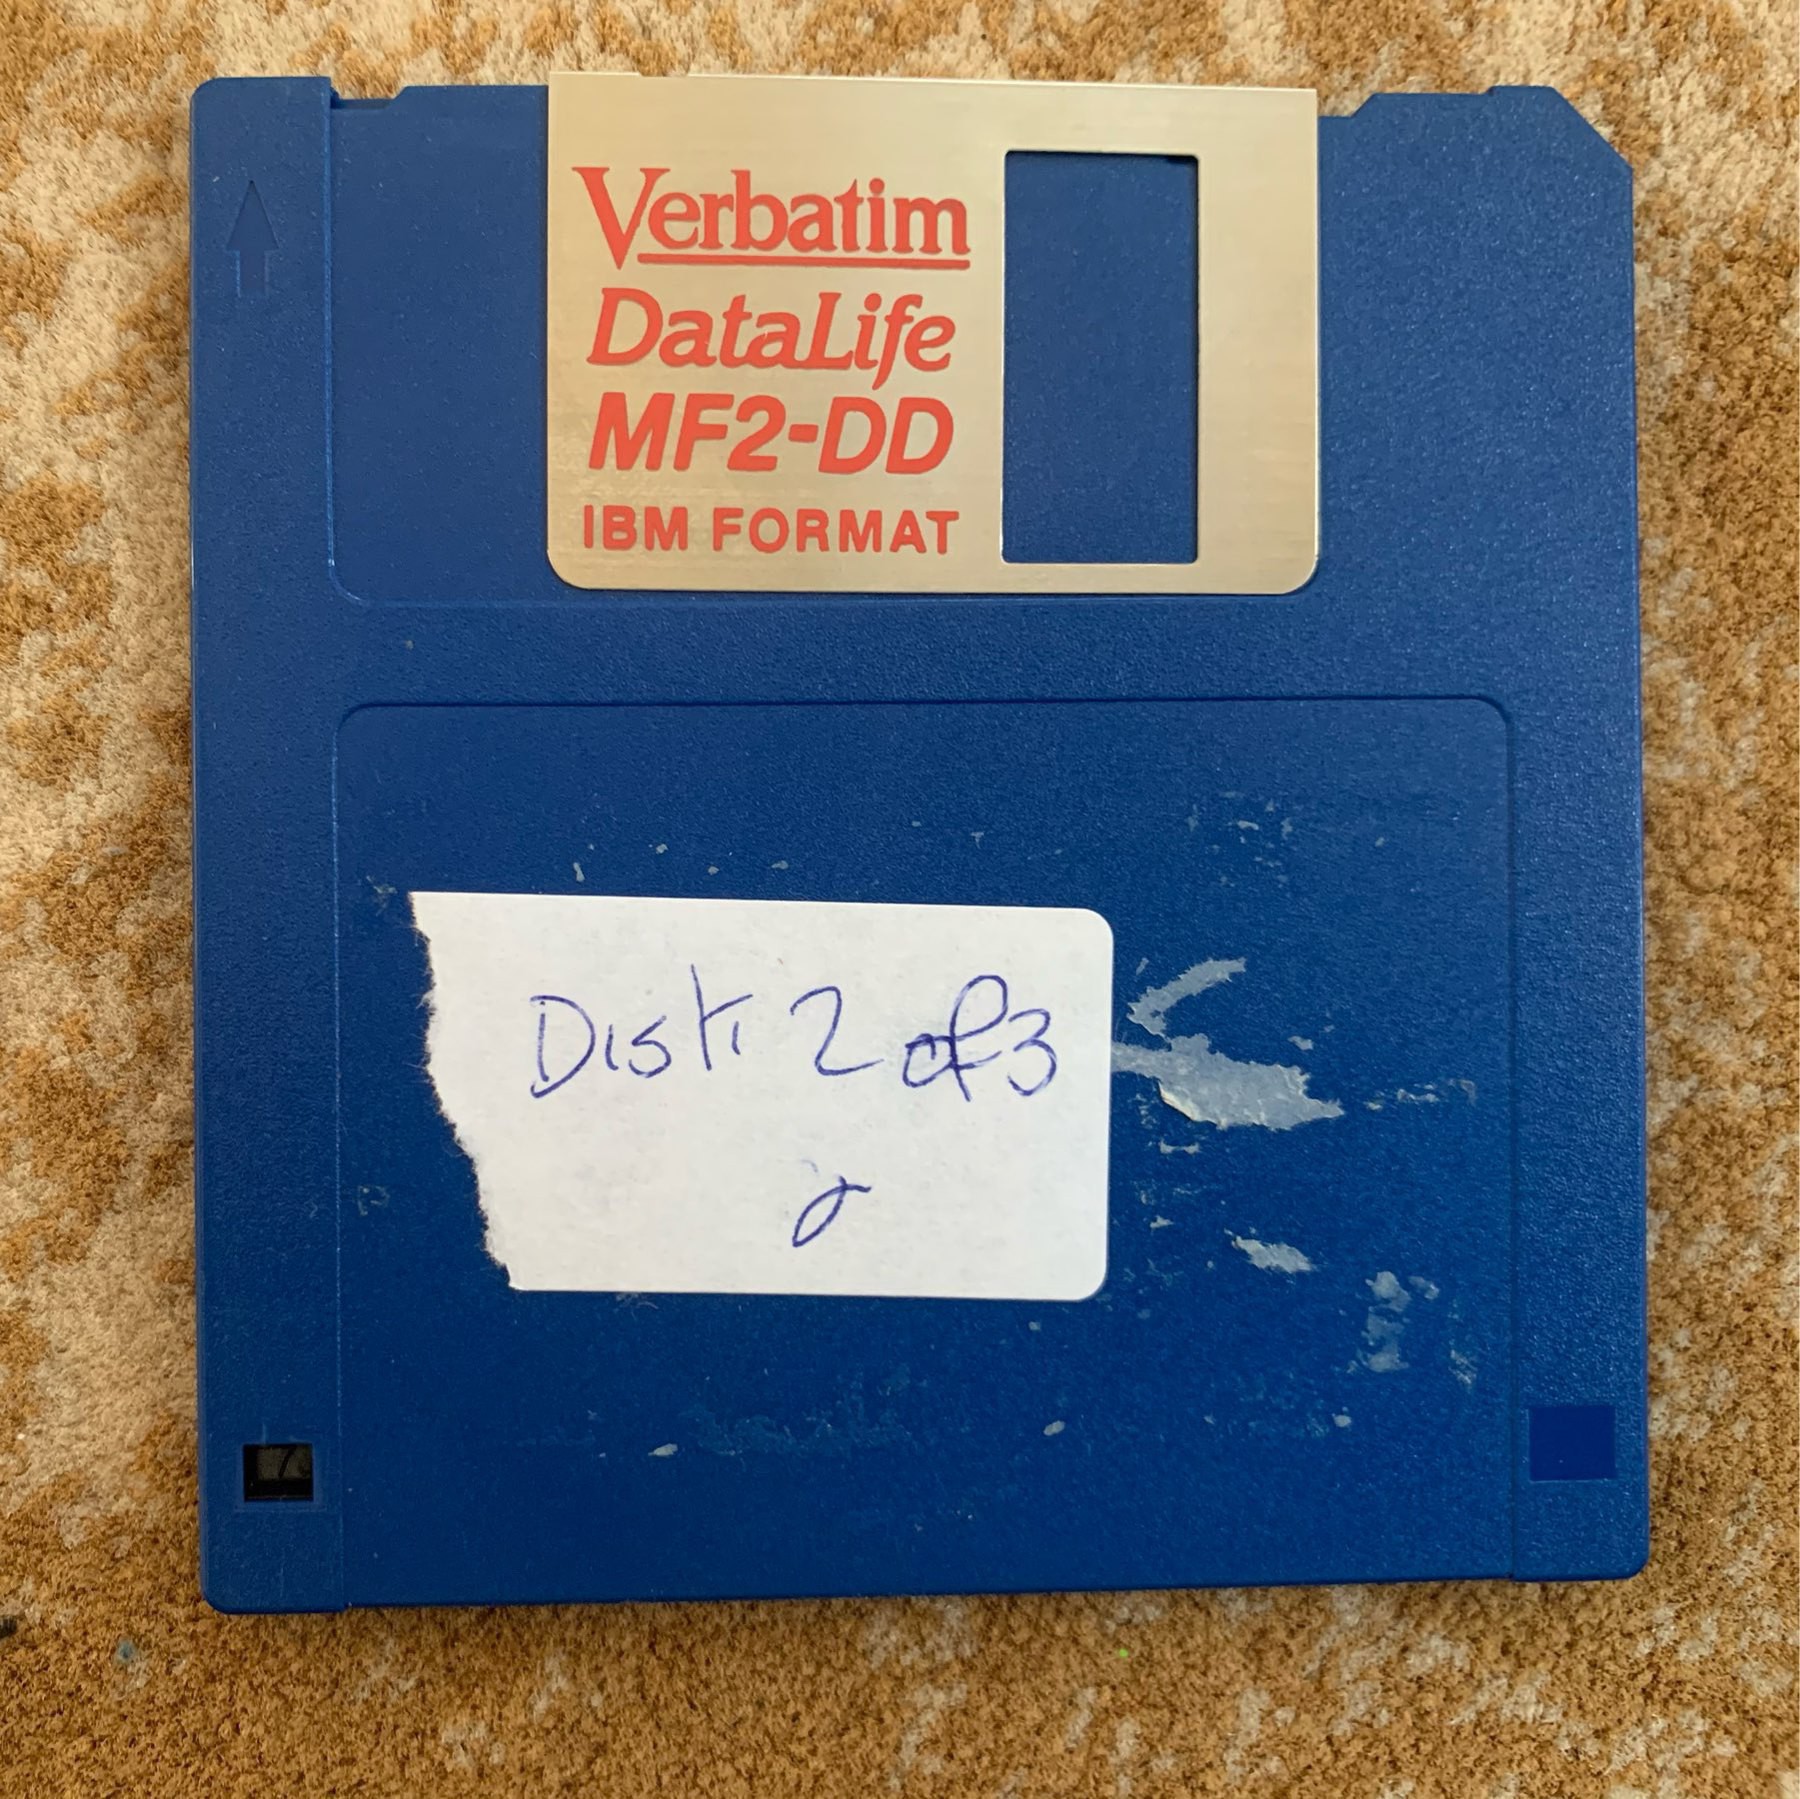 A floppy disk labelled Disk 2 of 3